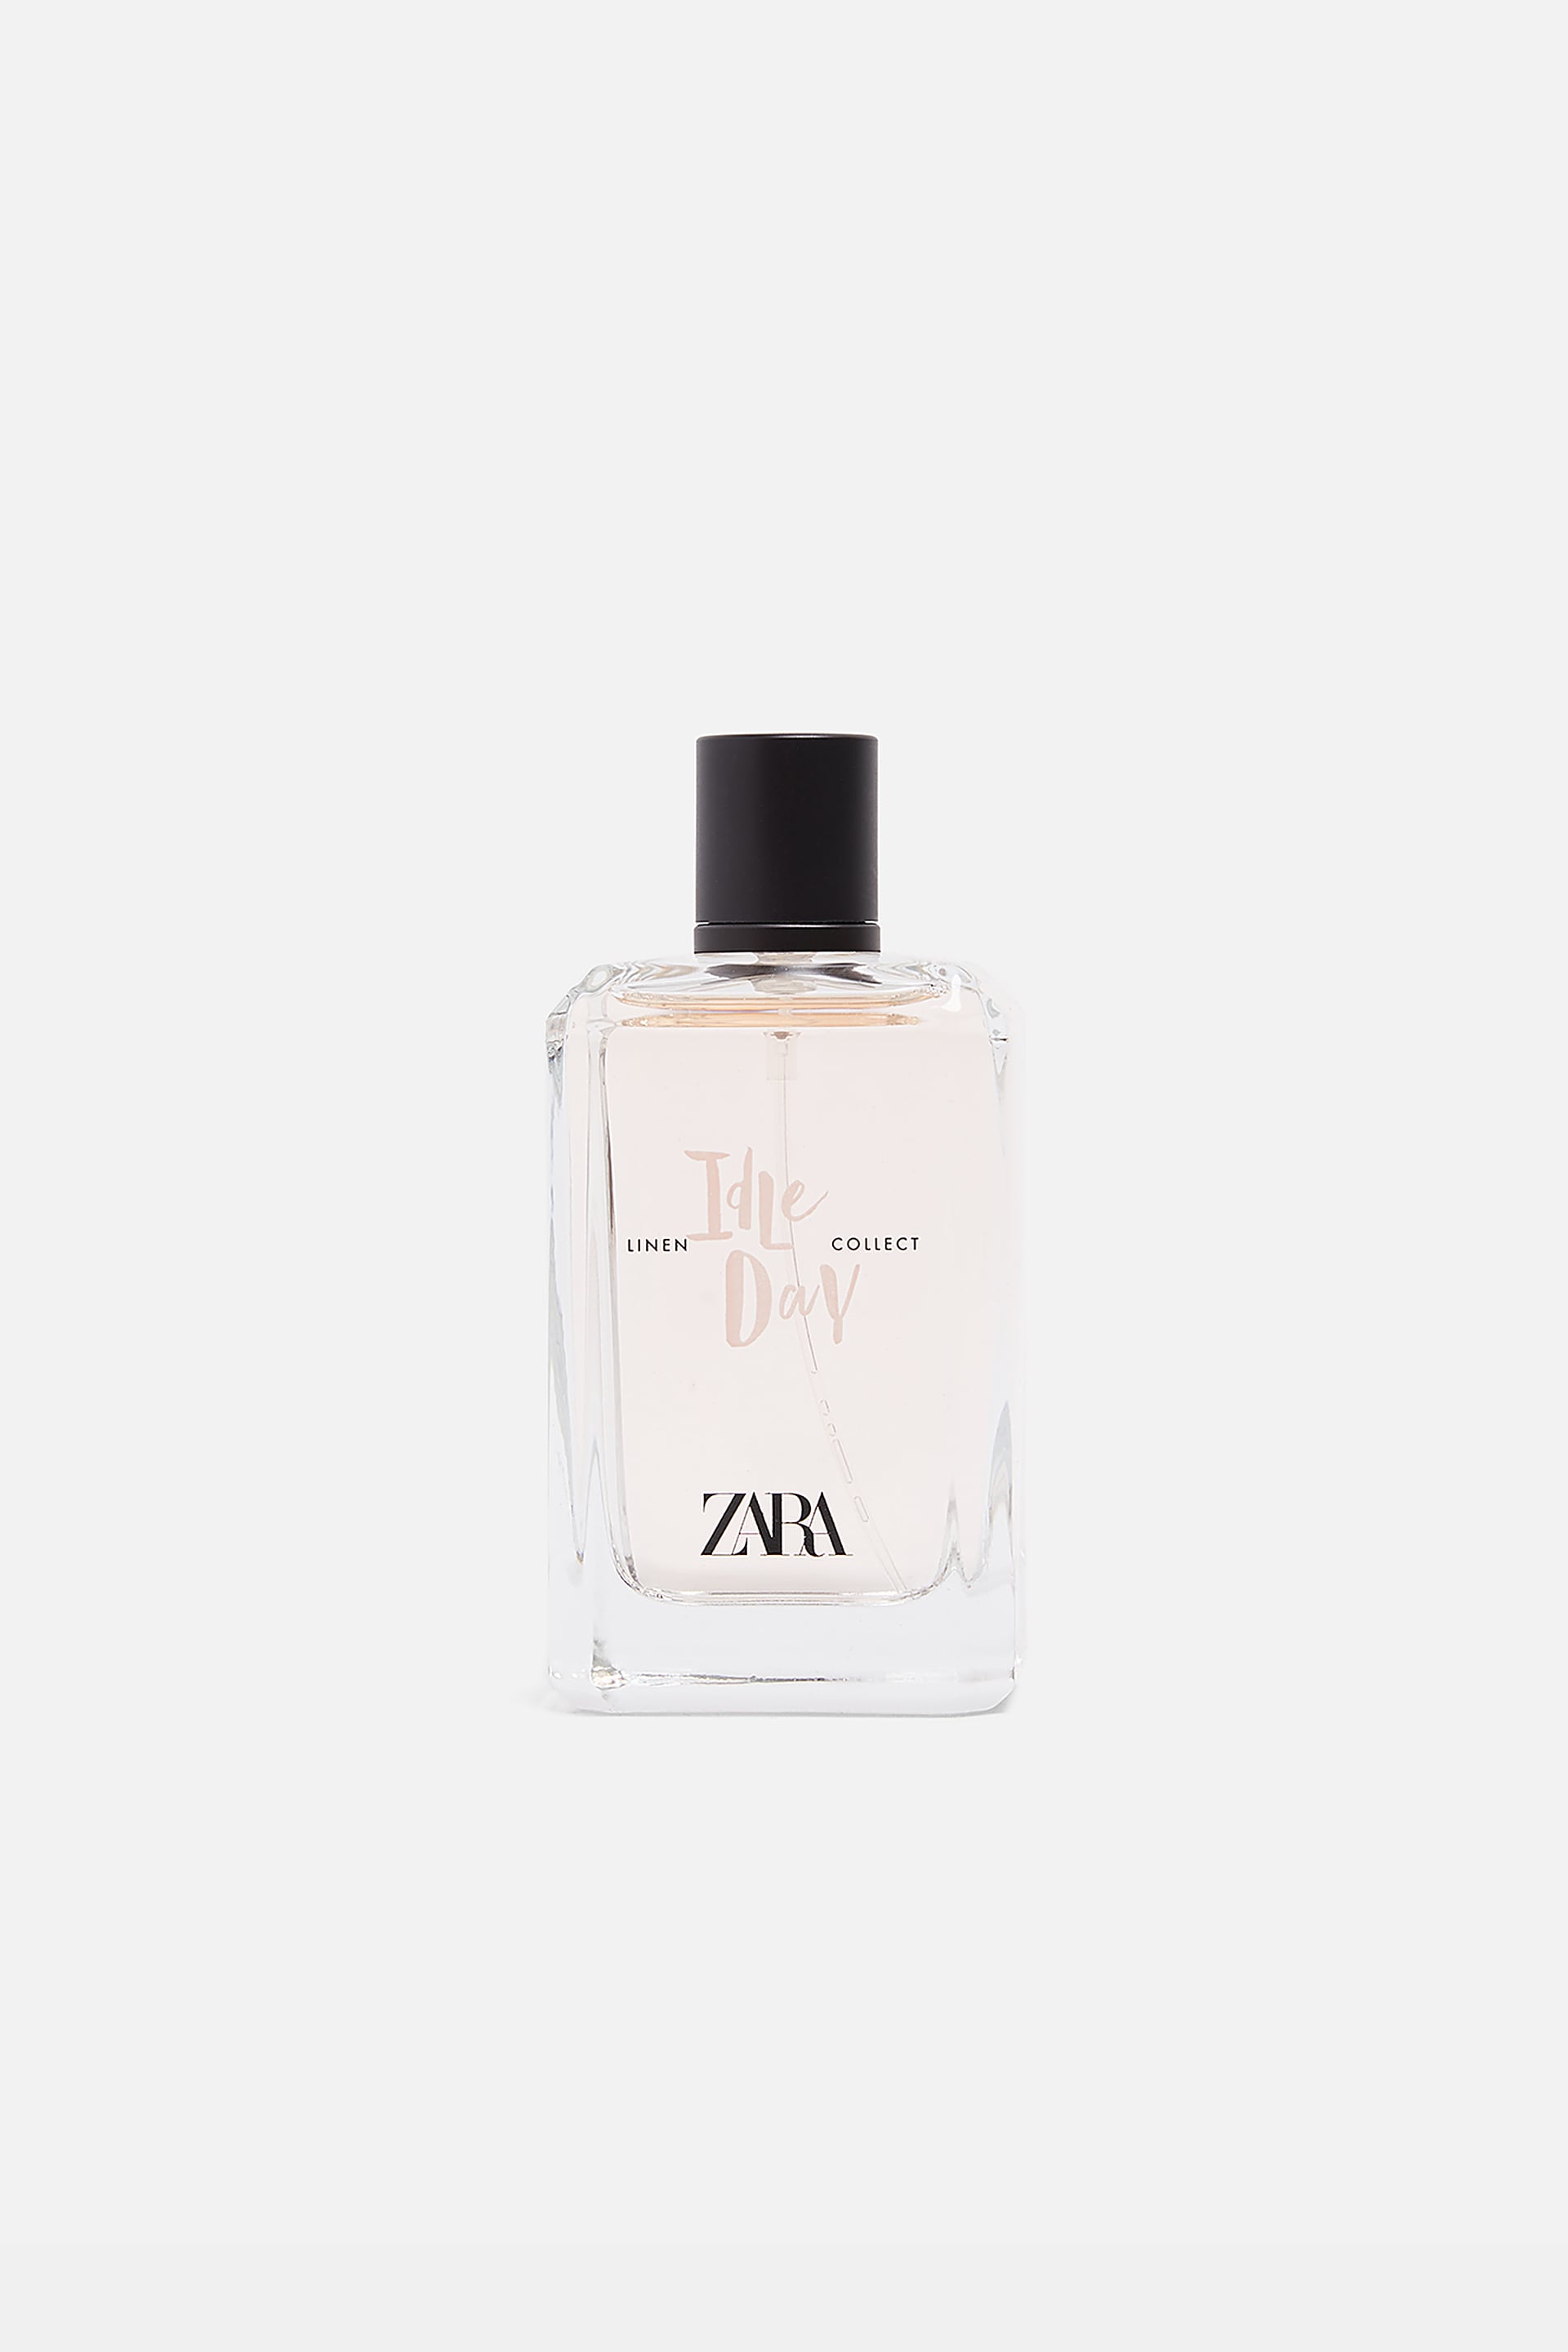 Idle Day Zara perfume - a fragrance for women 2019